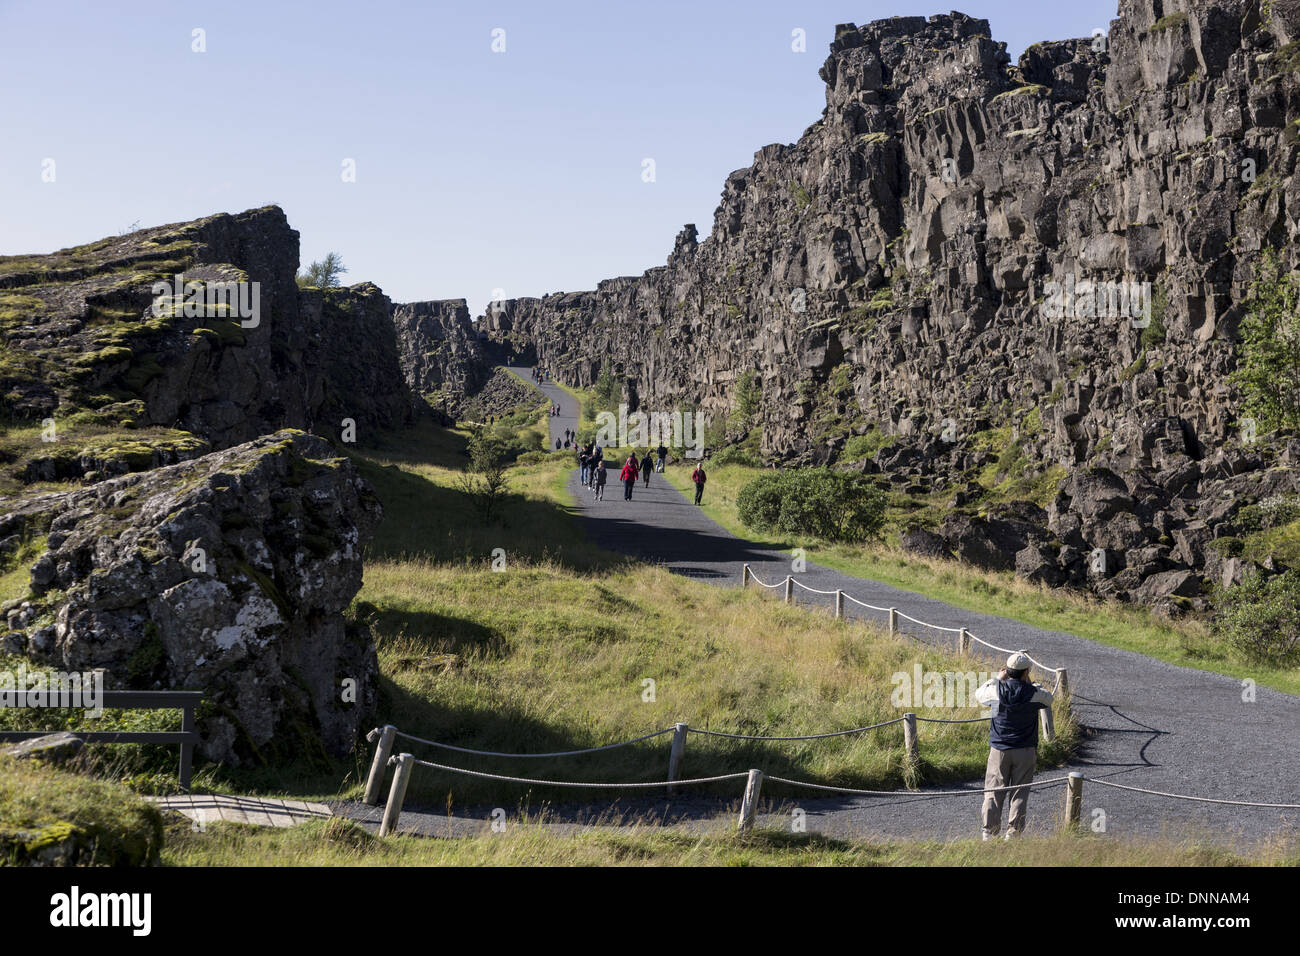 Thingvellir located on a fissure rift zone running through Iceland, on the tectonic plate boundaries of the Mid-Atlantic Ridge. Stock Photo